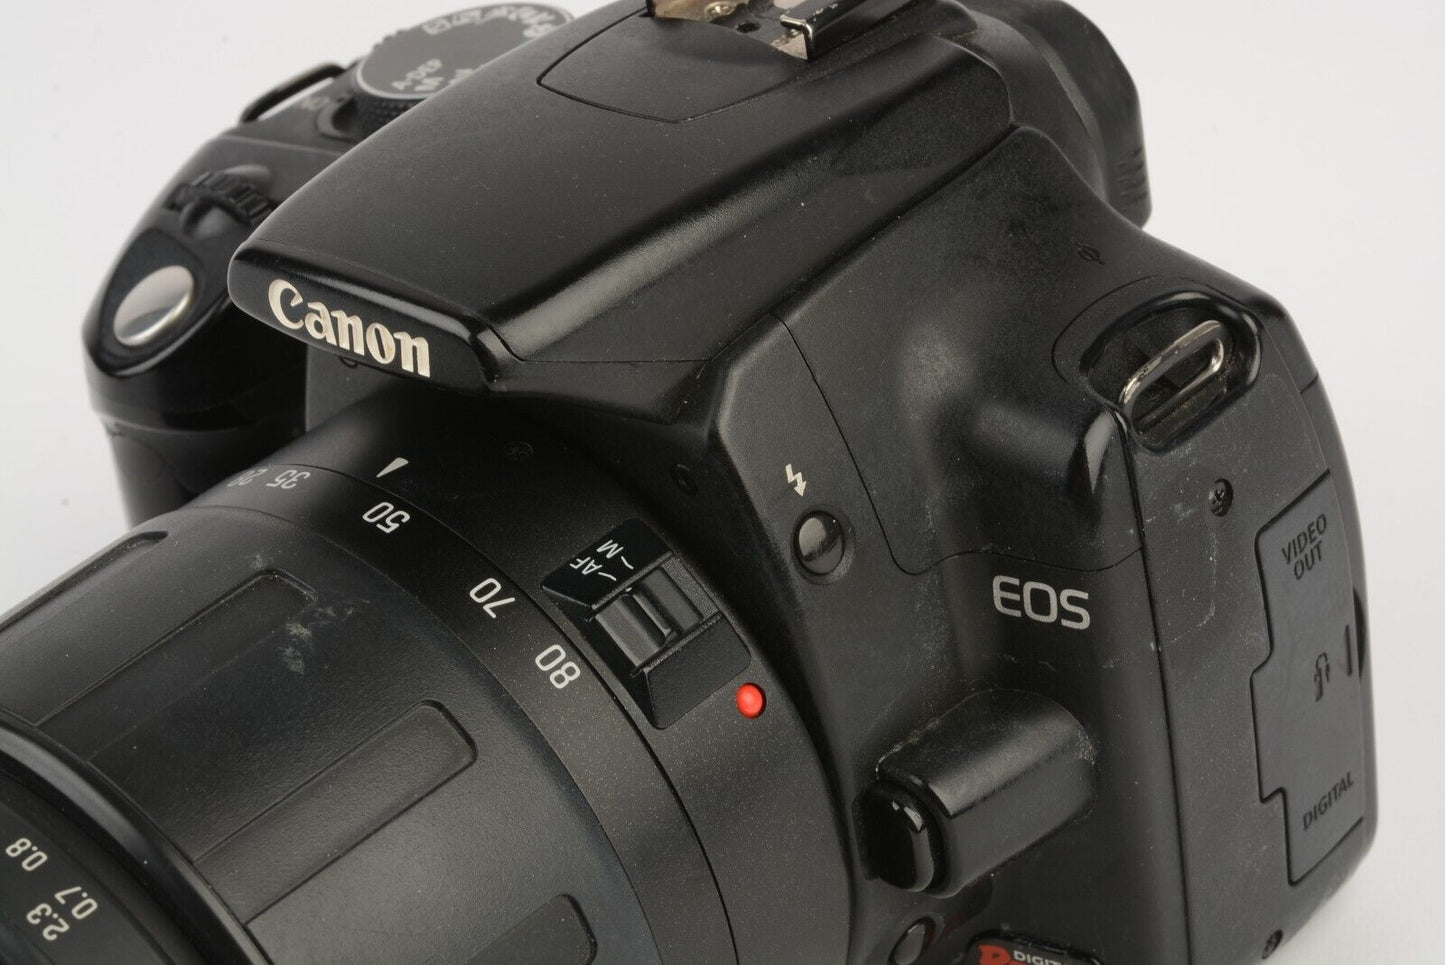 EXC+ CANON BLACK REBEL XT 8MP DSLR w/28-80mm F3.5-5.6 LENS, BATT+CHARGER+CARD++